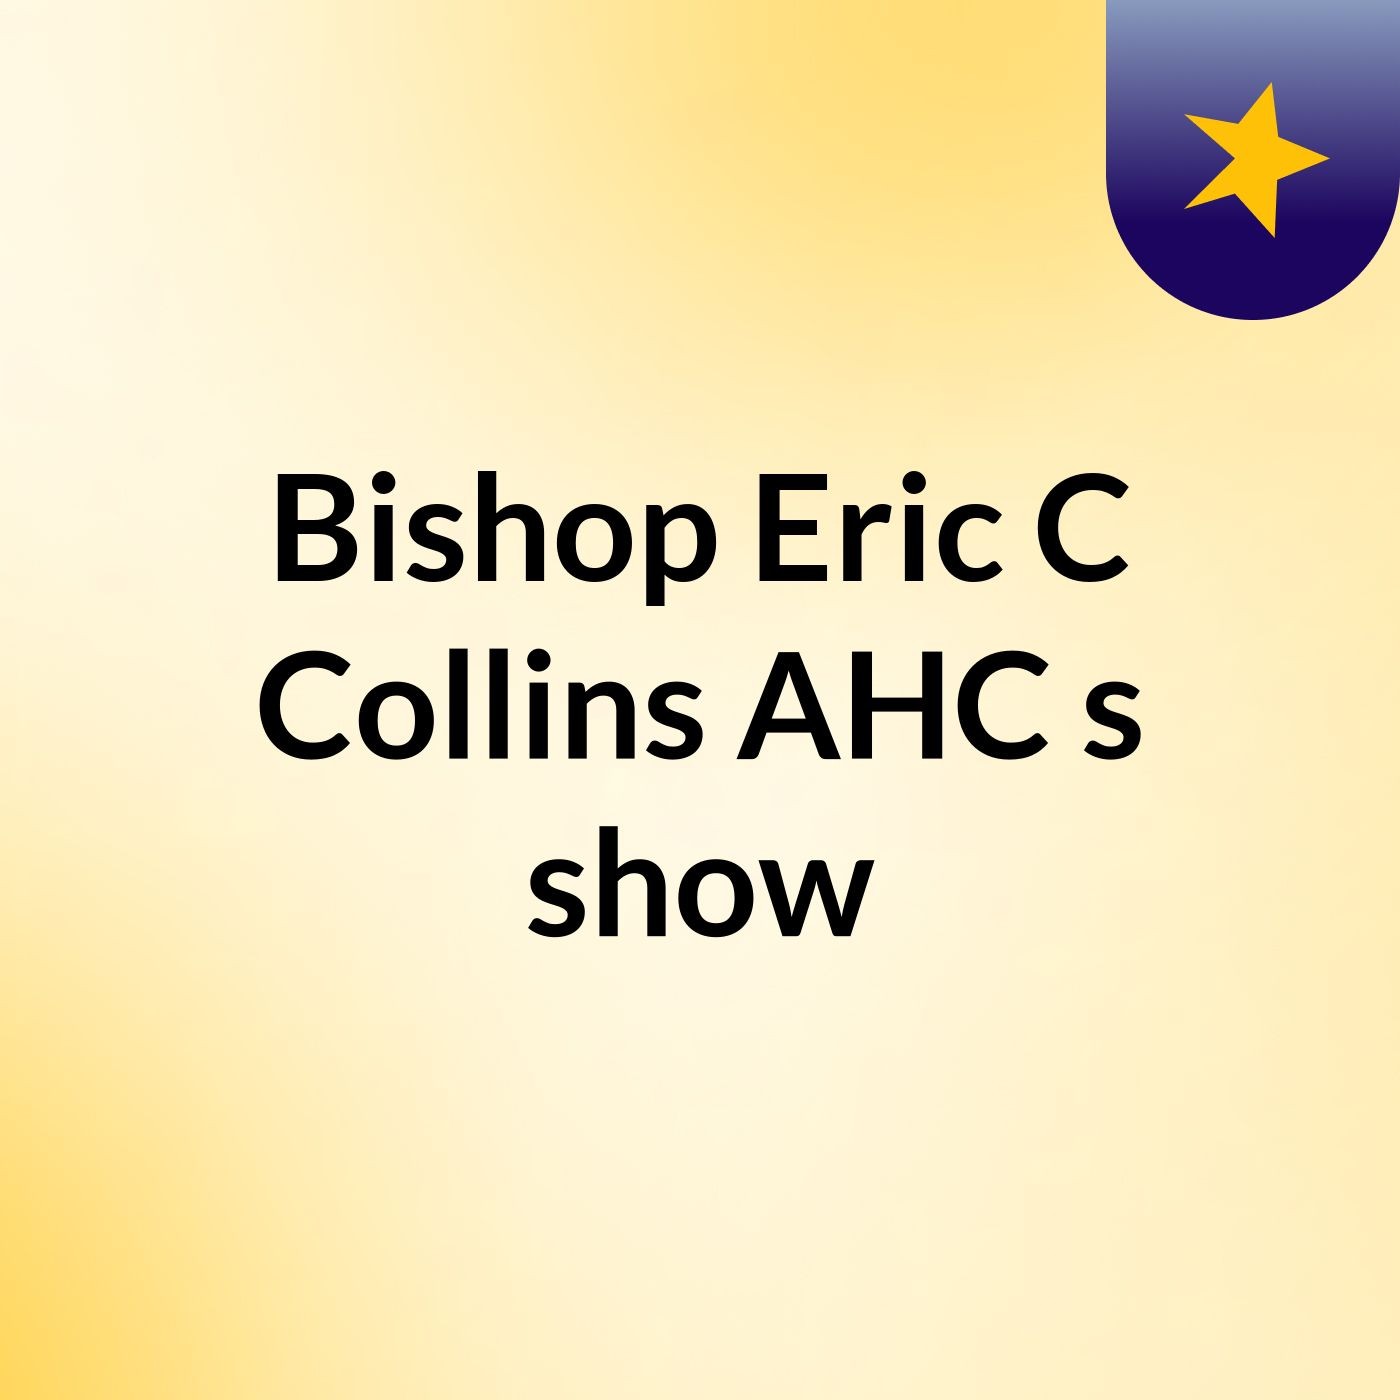 Episode 2 - Bishop Eric C Collins AHC's show